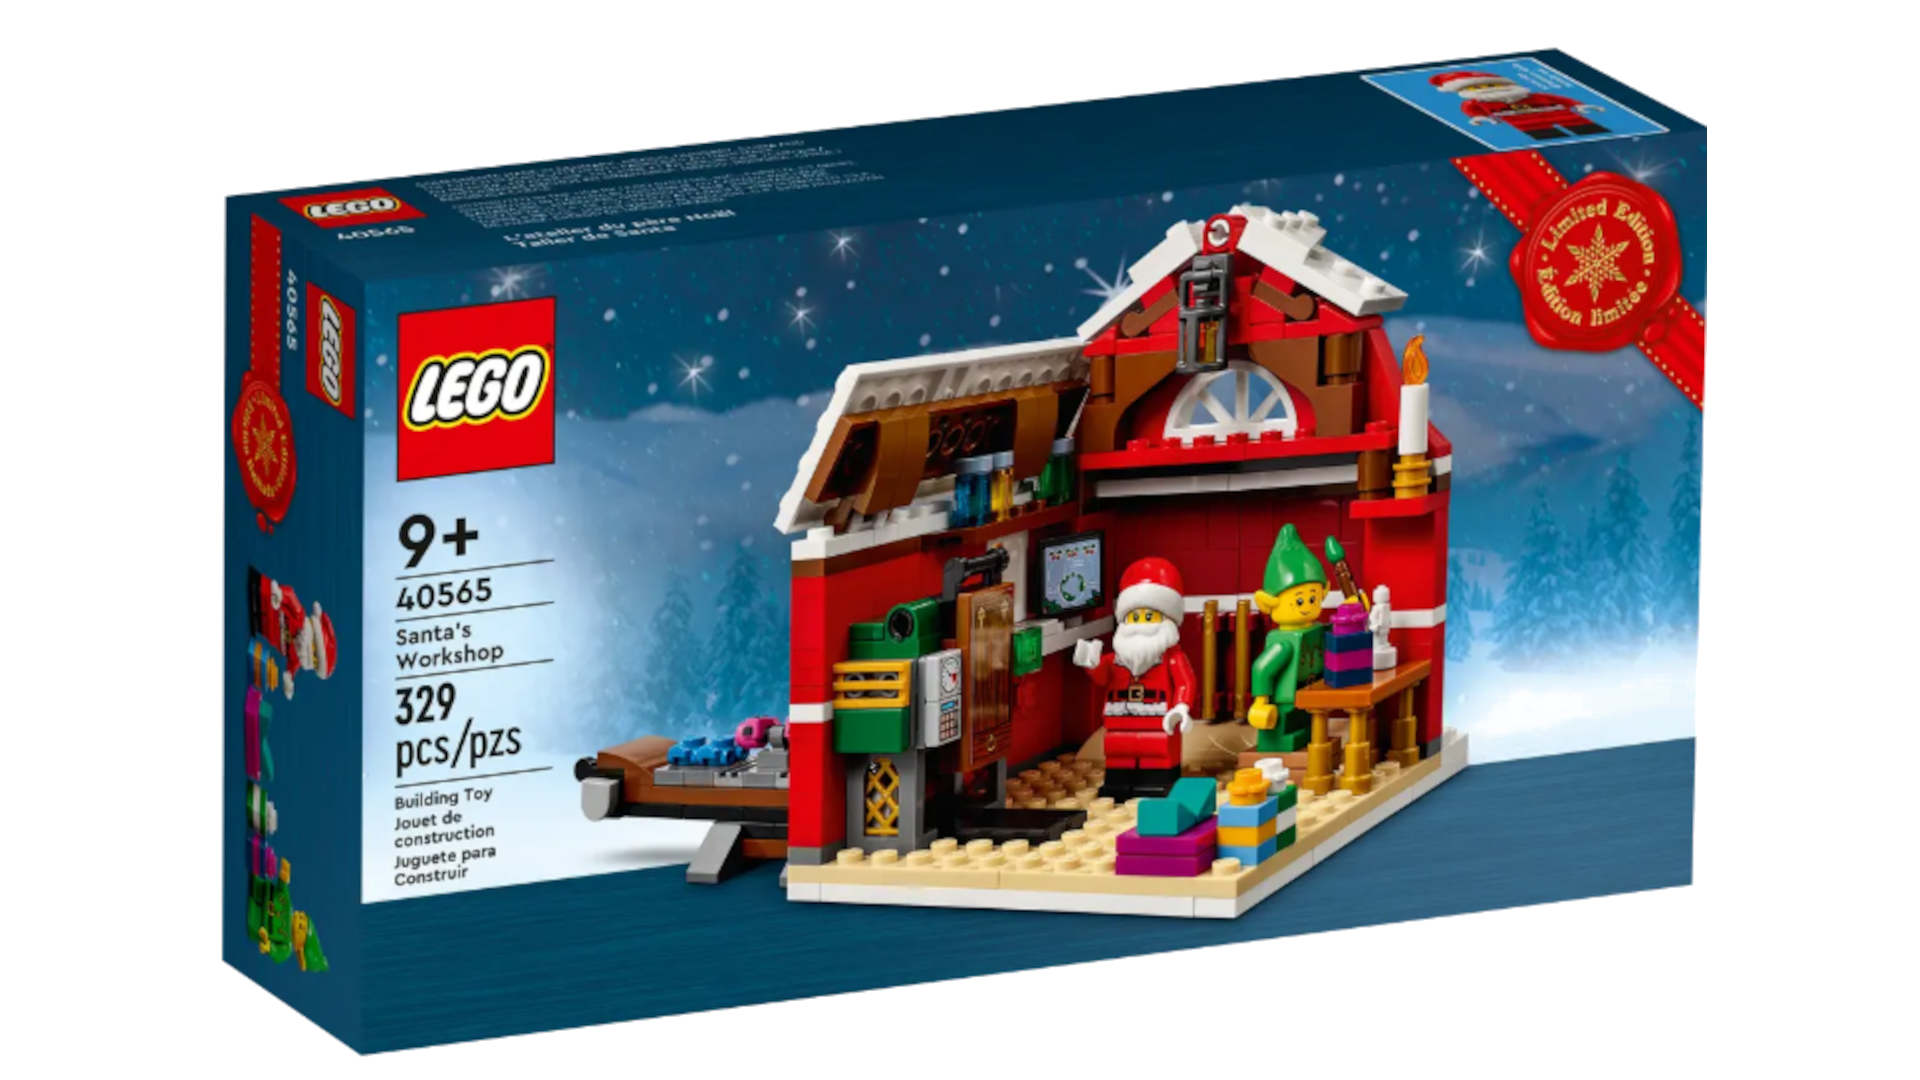 A LEGO box shows the Santa's Workshop set.